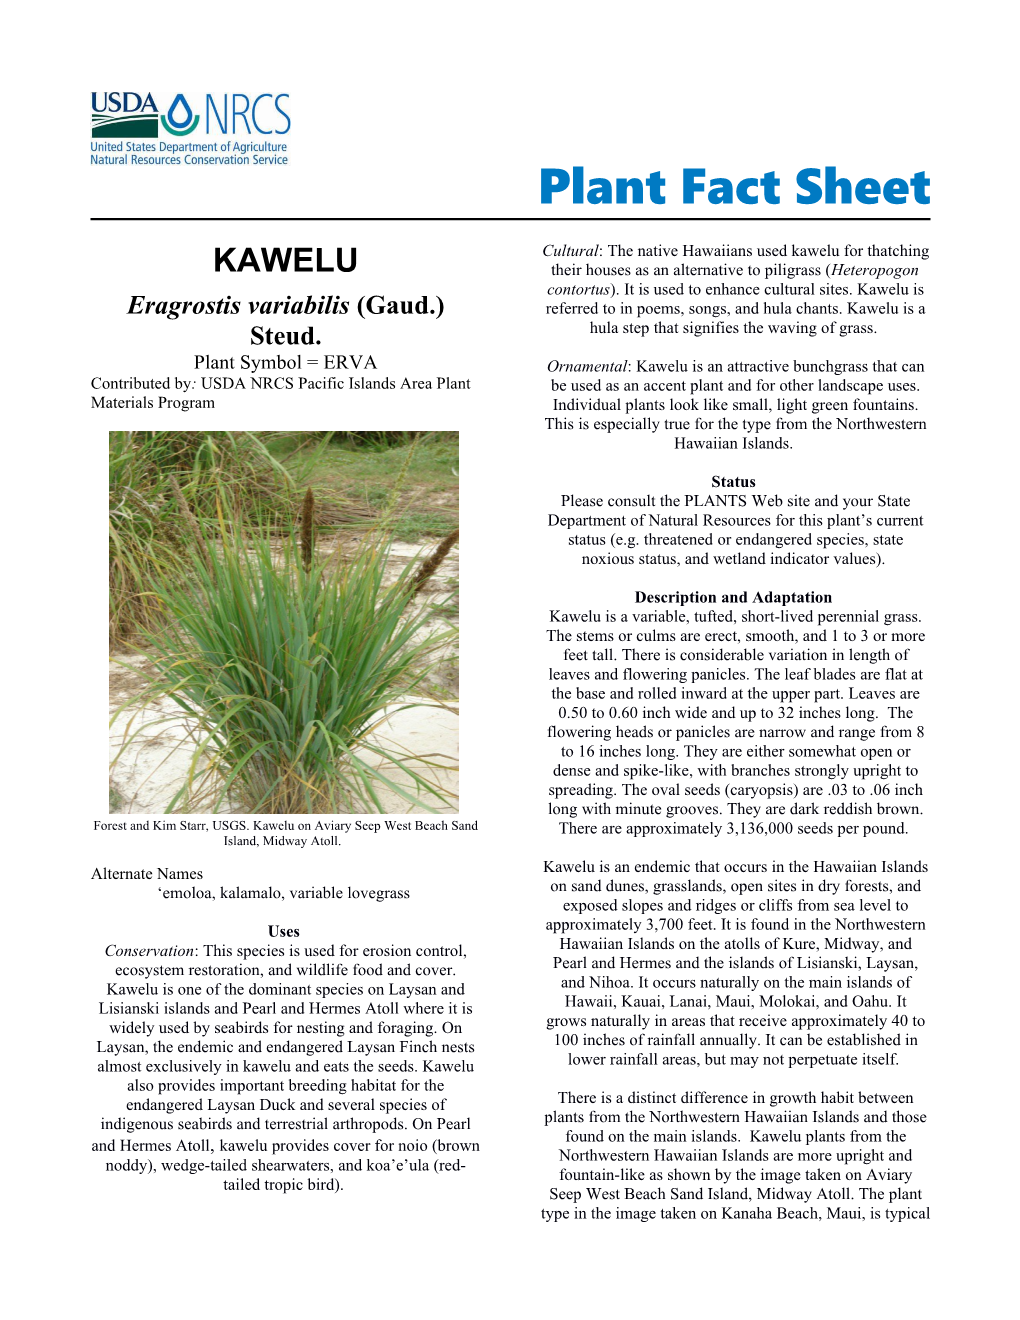 Kawelu Plant Fact Sheet